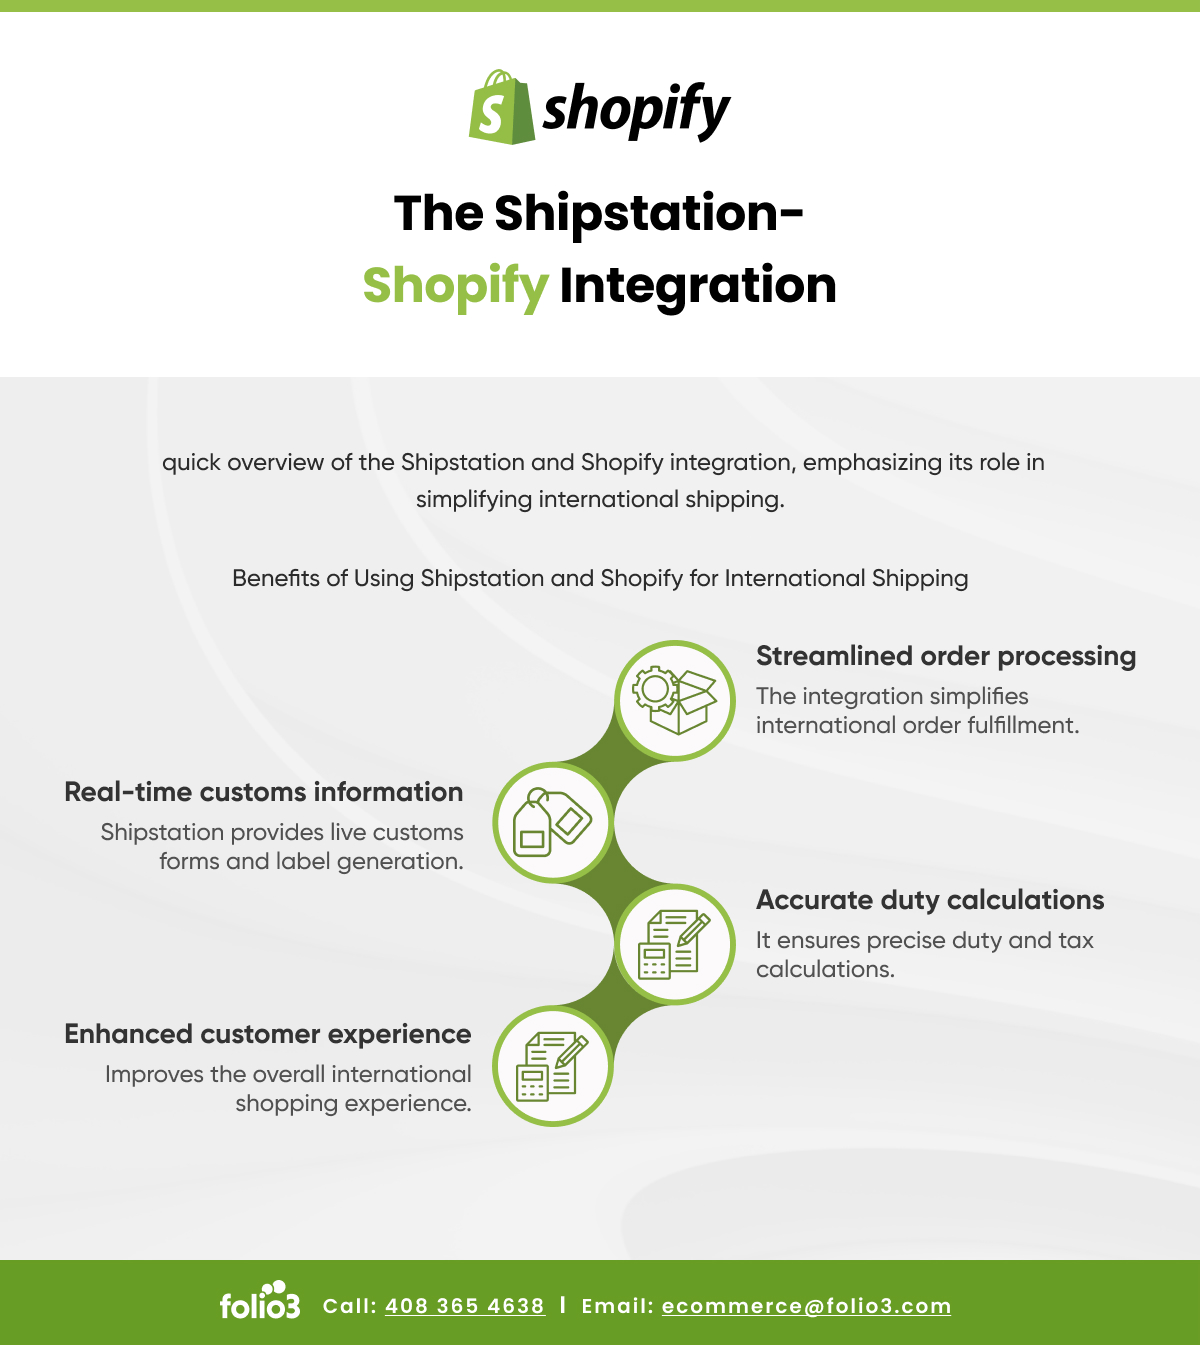 The Shipstation-Shopify Integration - benefits